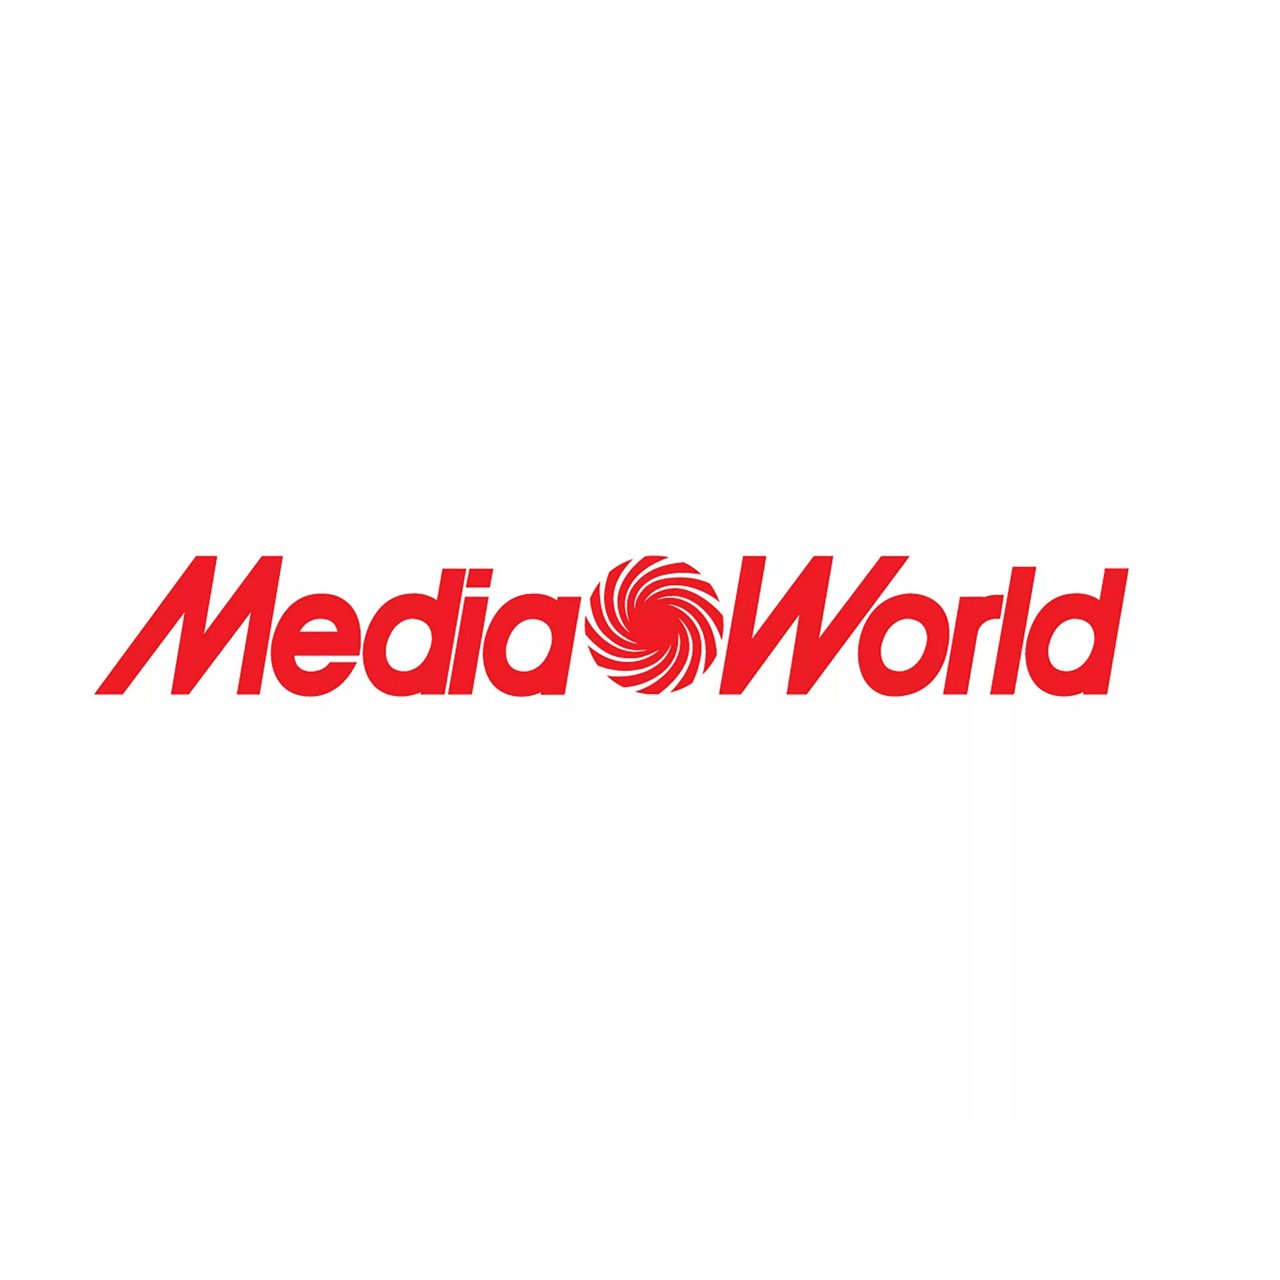 Mediaworld Performance beyond the lockdown